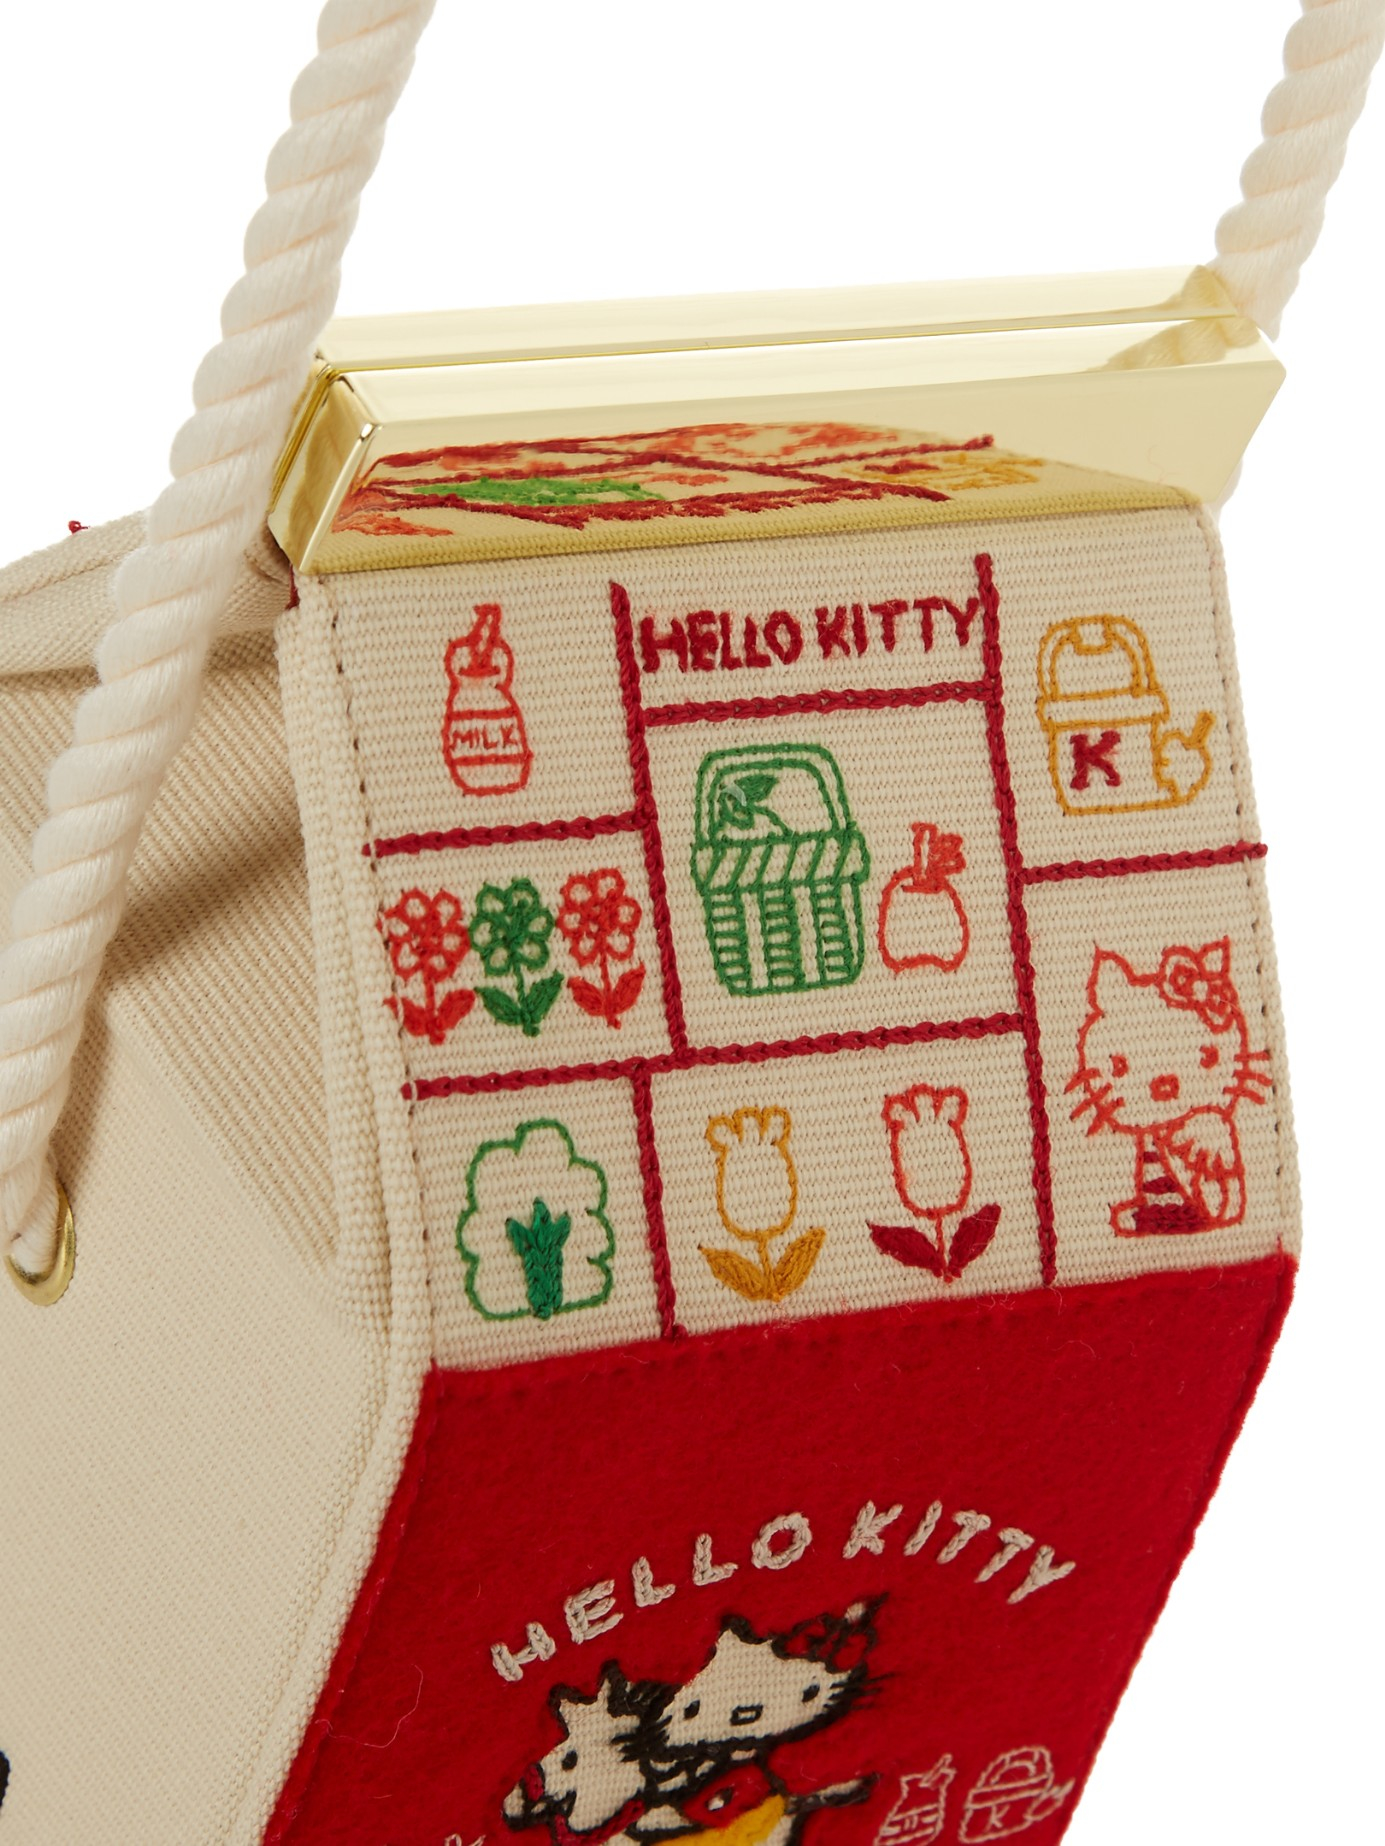 Lyst - Olympia Le-Tan Hello Kitty Milk-carton Shoulder Bag